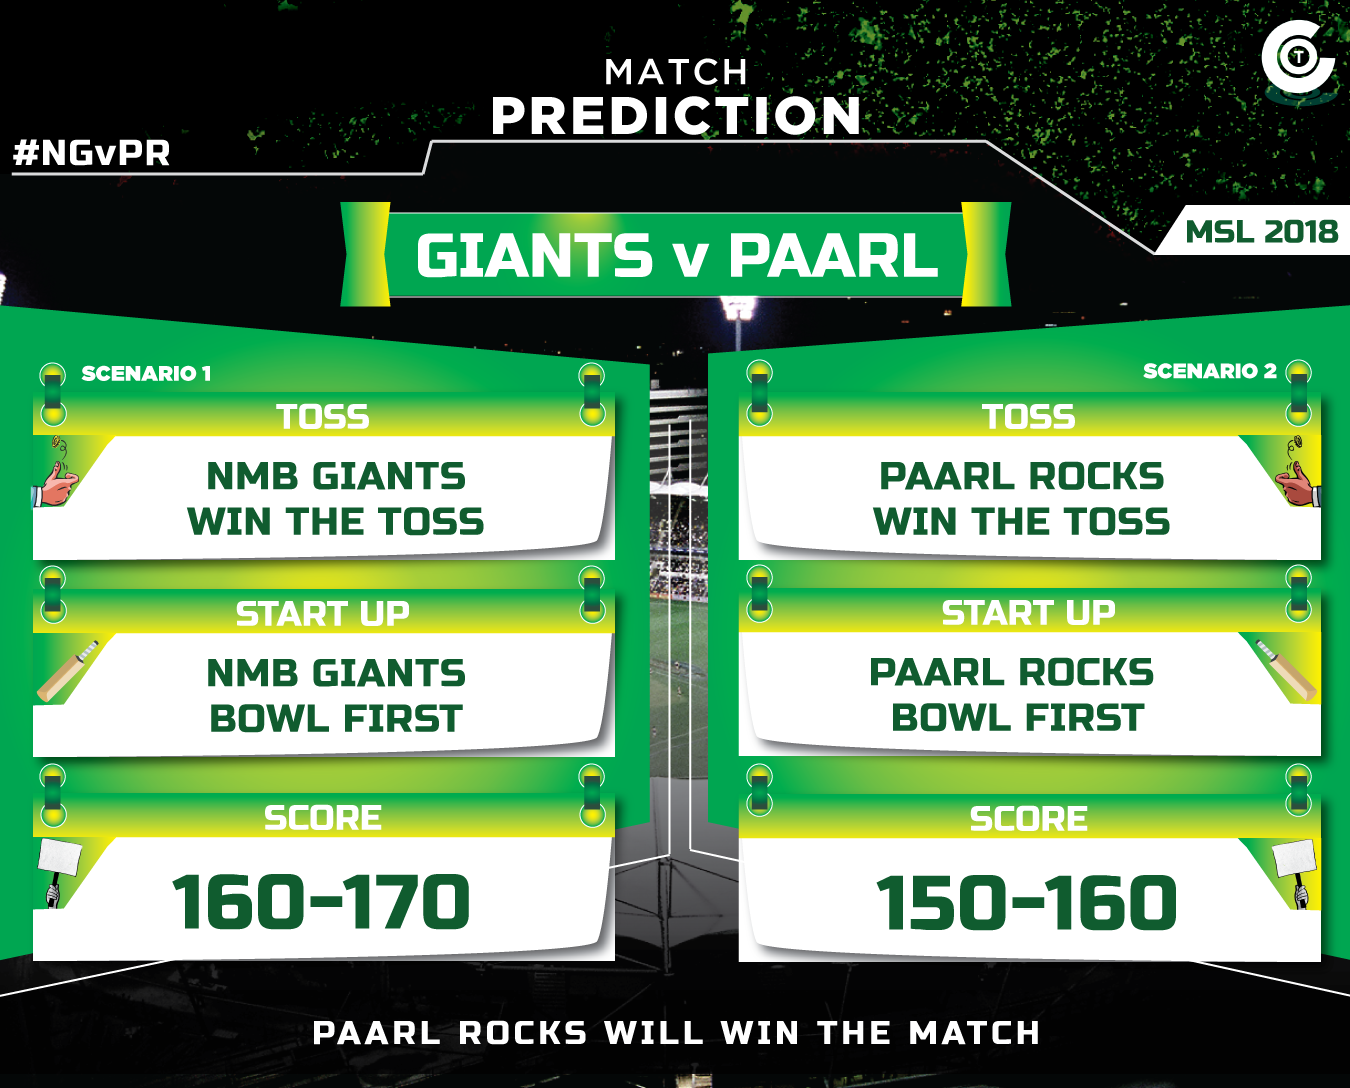 NBvPR-match-prediction-Nelson-Mandela-Bay-Giants-vs-Paarl-Rocks-Blitz-MSL-2018-match-prediction.jpg